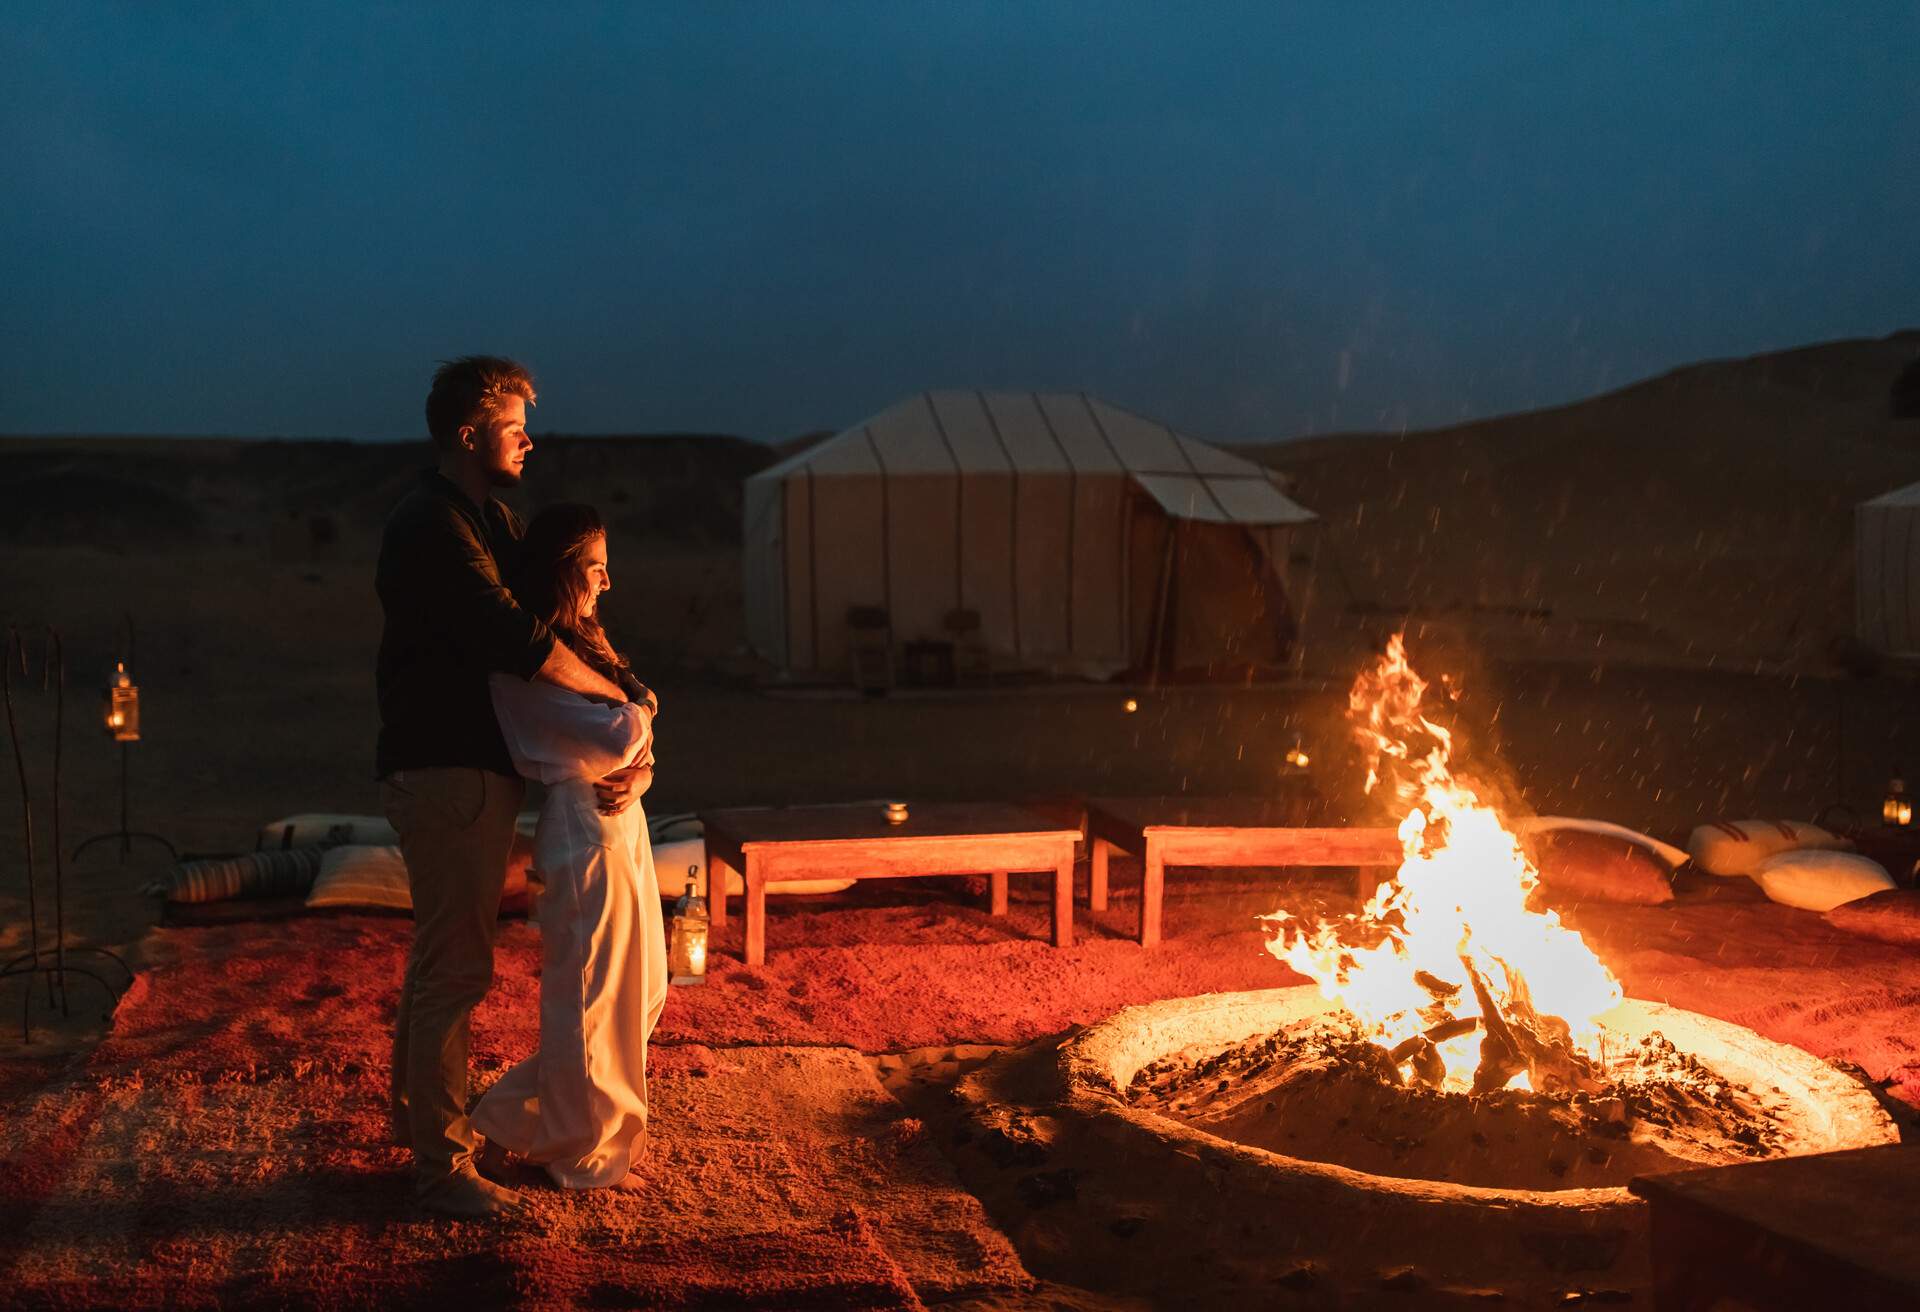 A man hugs a woman from behind enjoying a campfire in the desert.